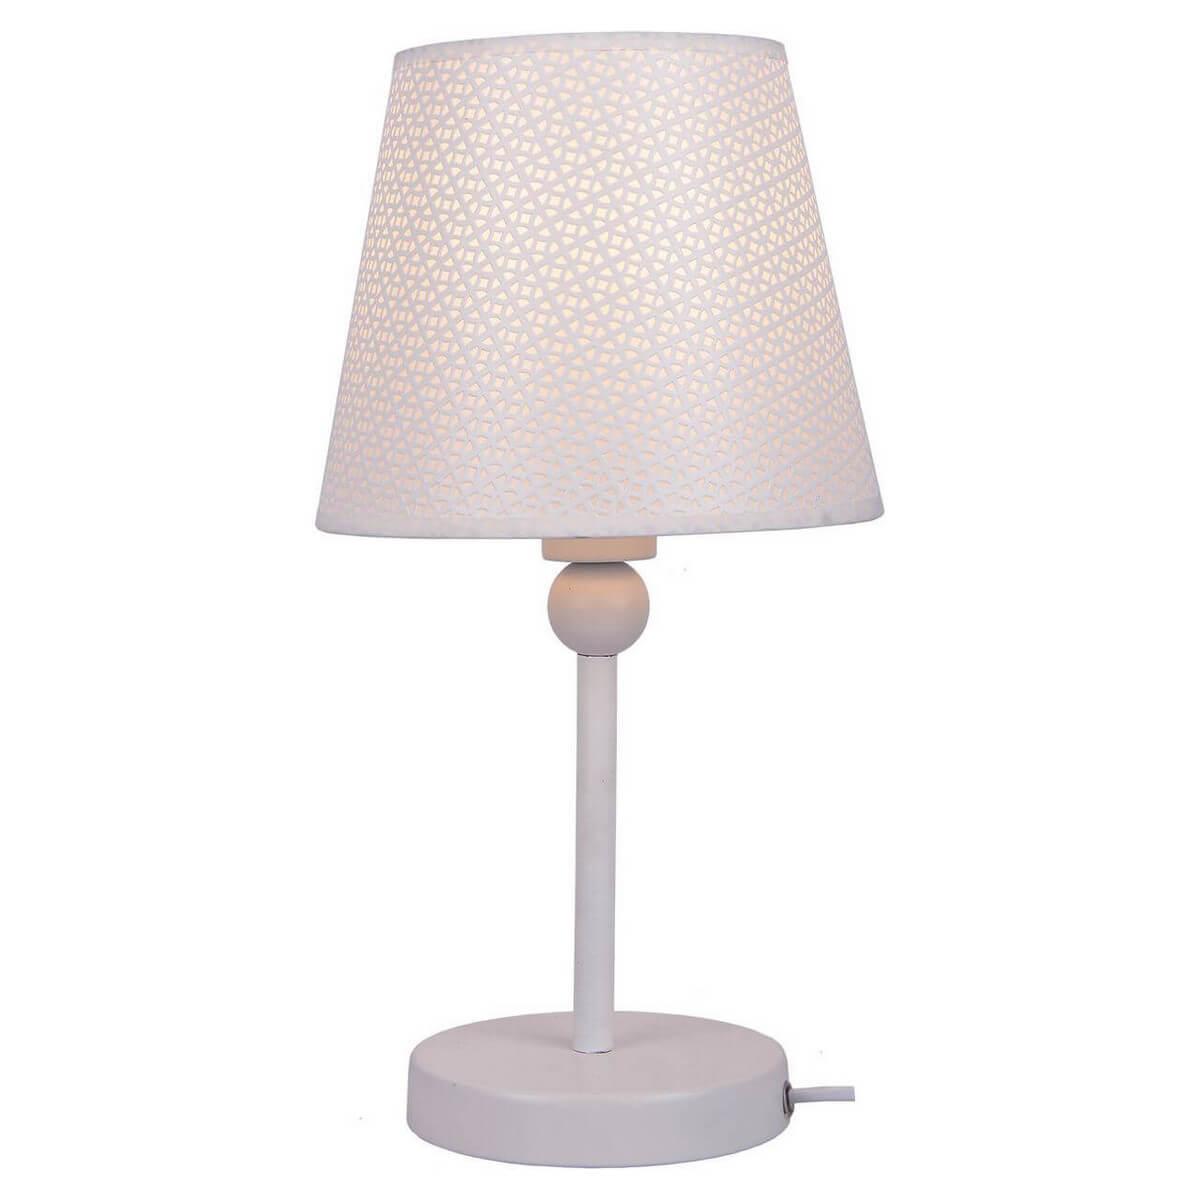 Настольная лампа Lussole Lgo LSP-0541 настольная лампа ilamp rockfeller 100t 5 matt bronze